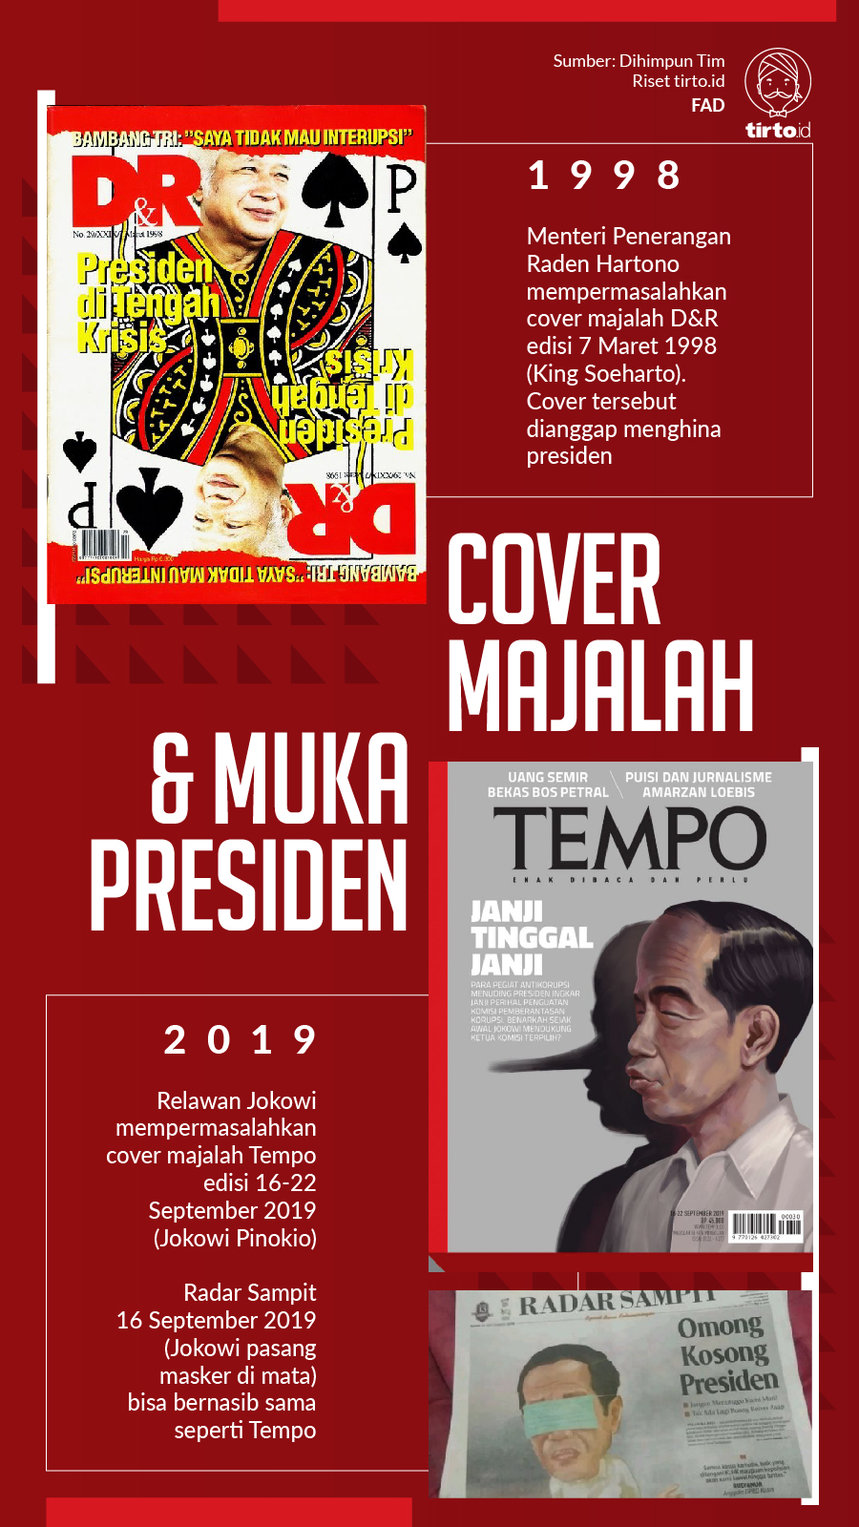 Infografik Majalah Muka Presiden